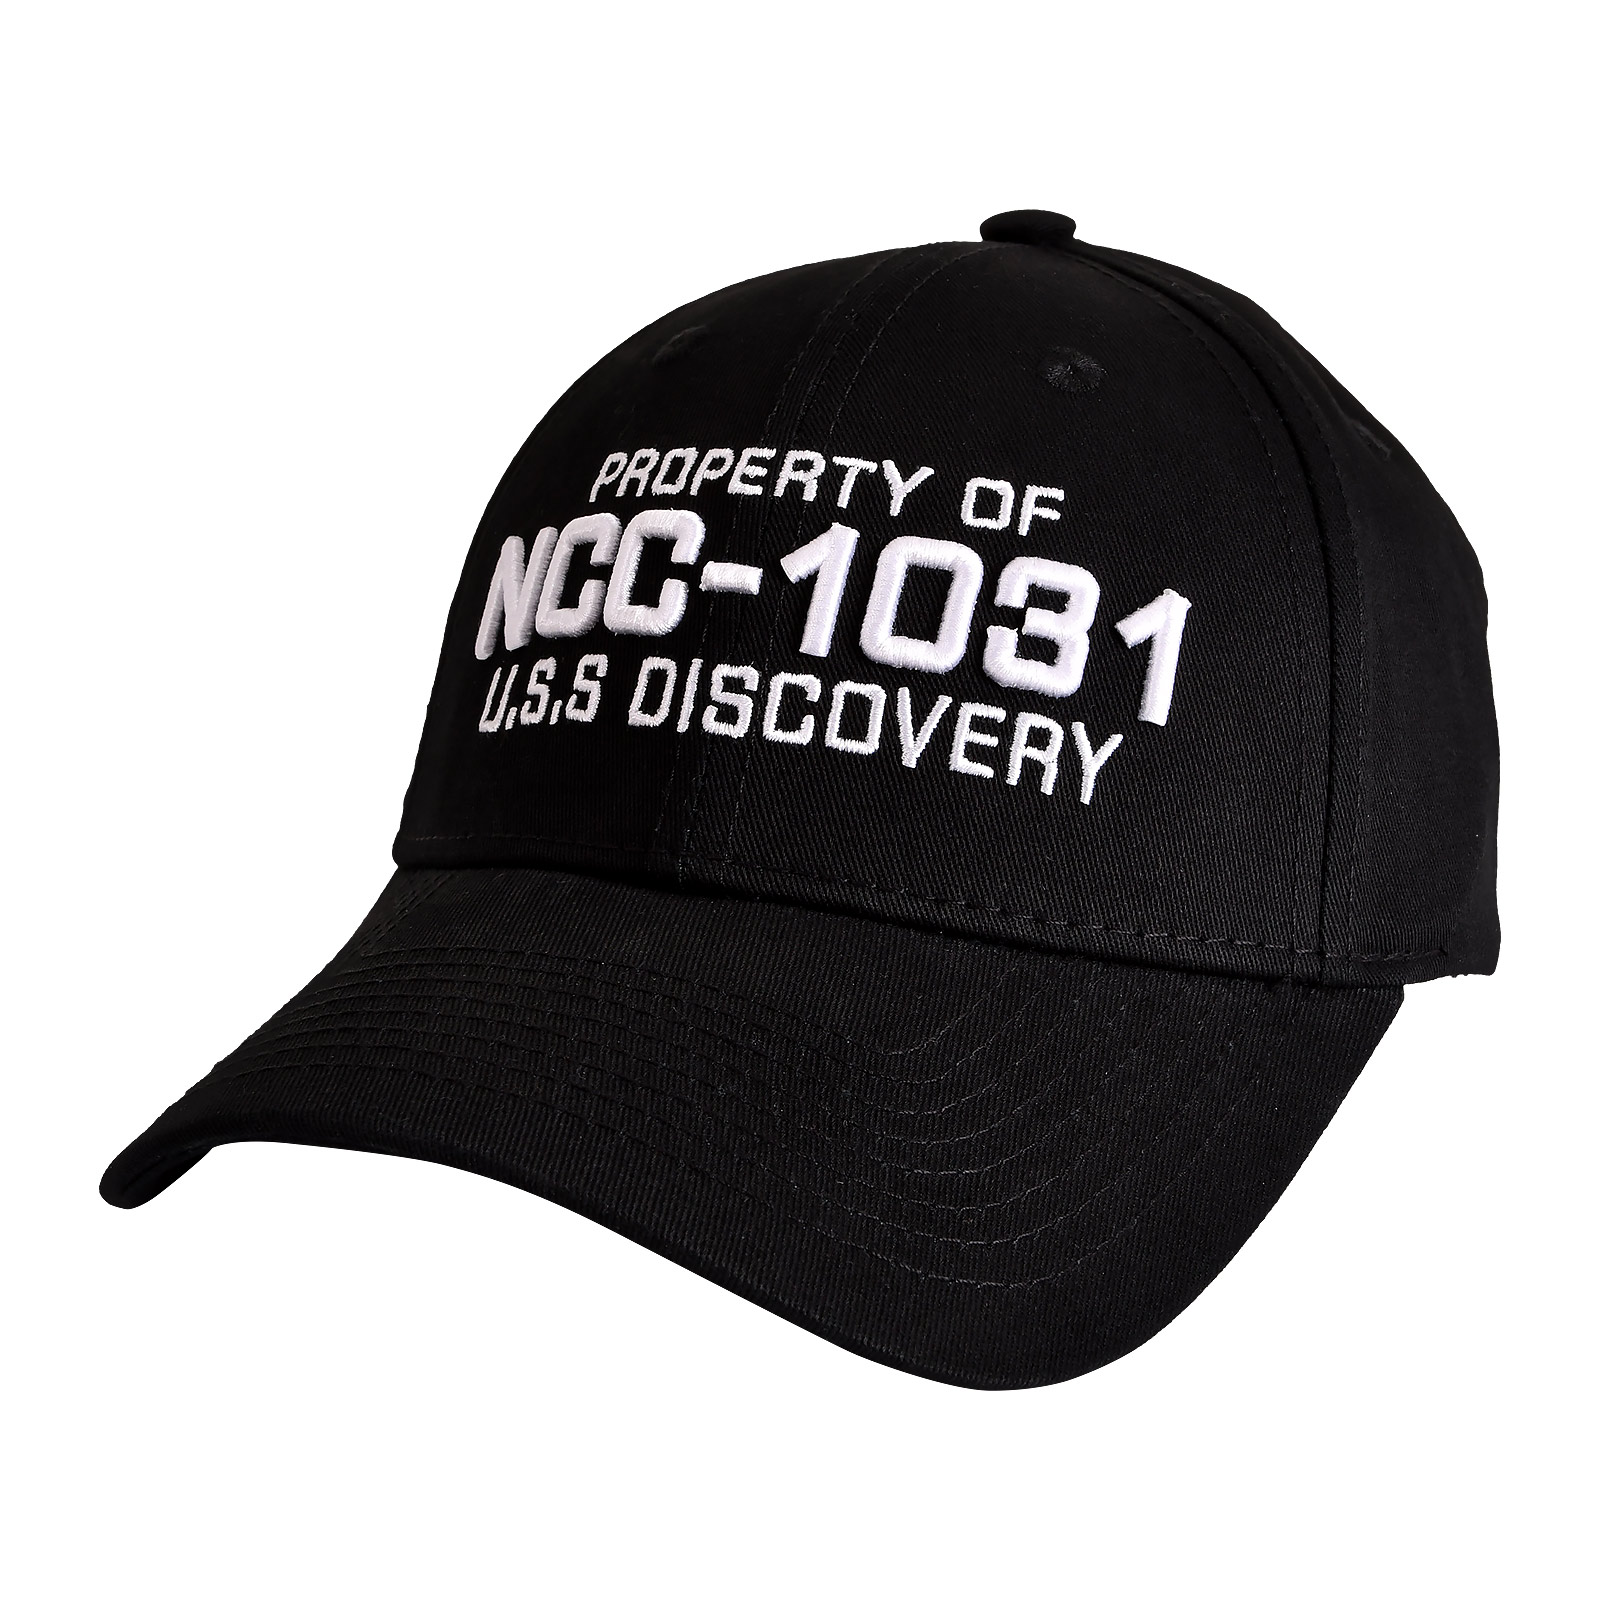 Star Trek - Casquette de baseball USS Discovery NCC-1031 Noire